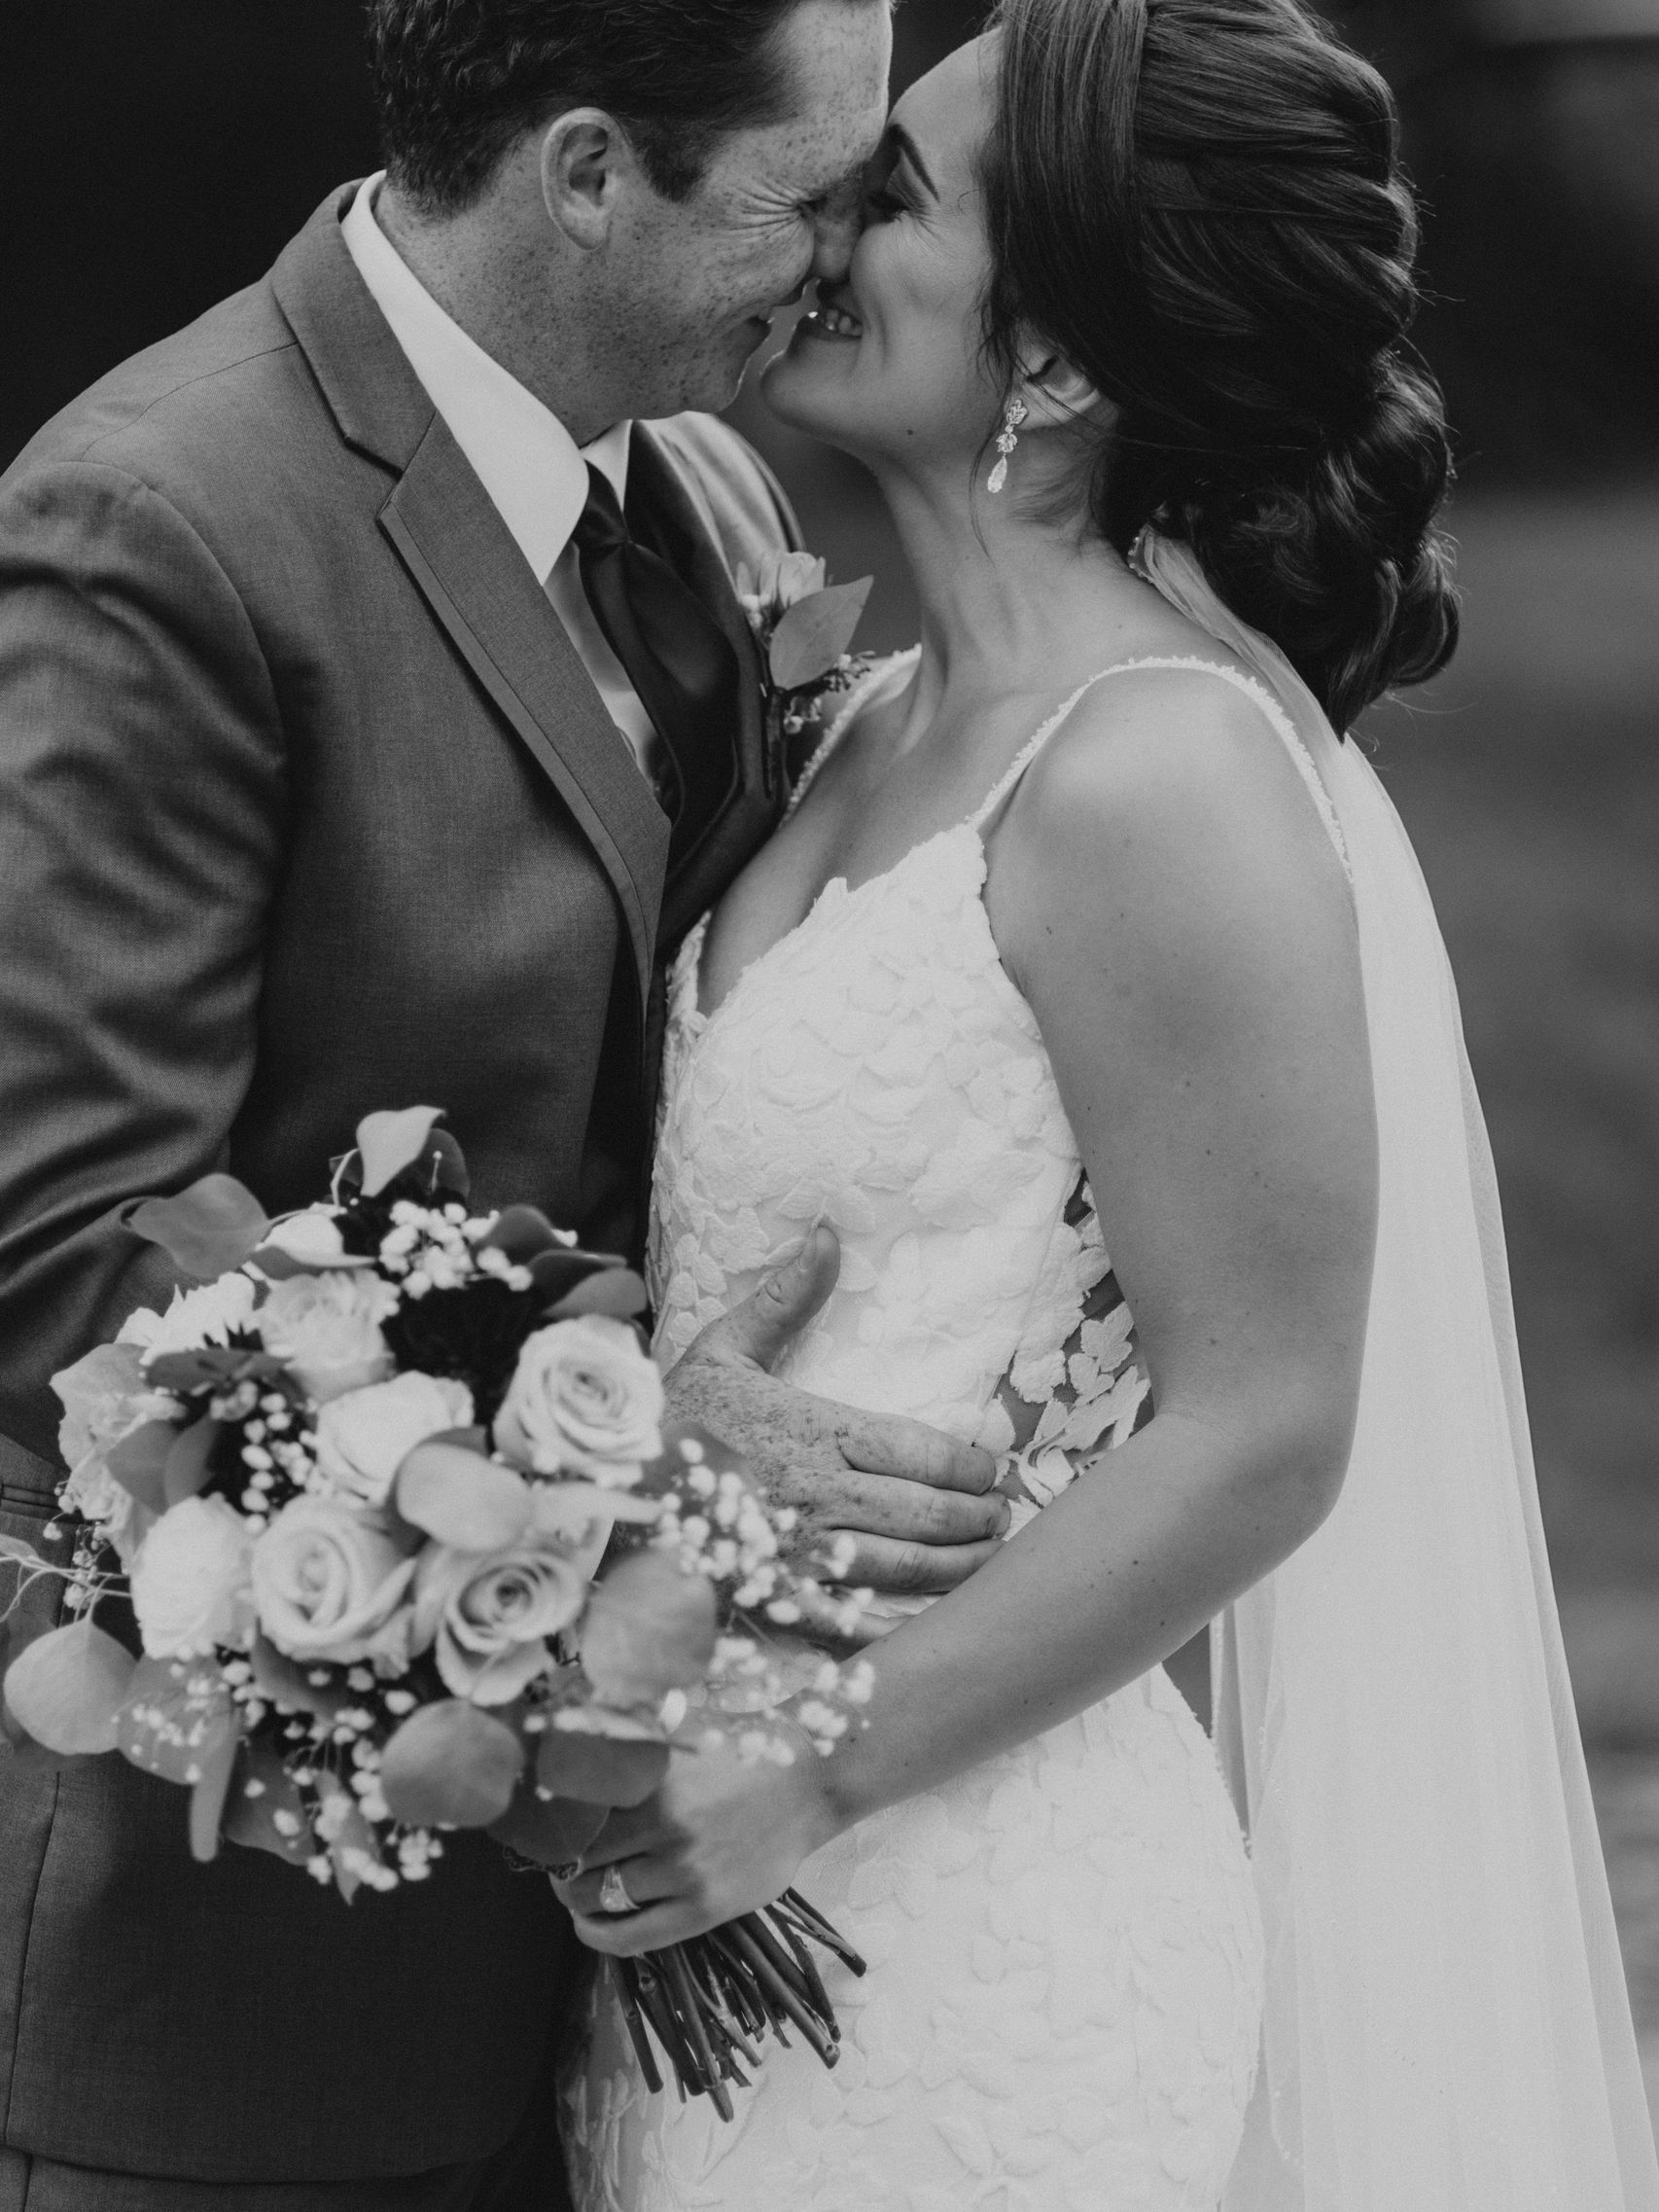 Black and white wedding portrait of bride and groom in Trenton, Quinte West, Ontario